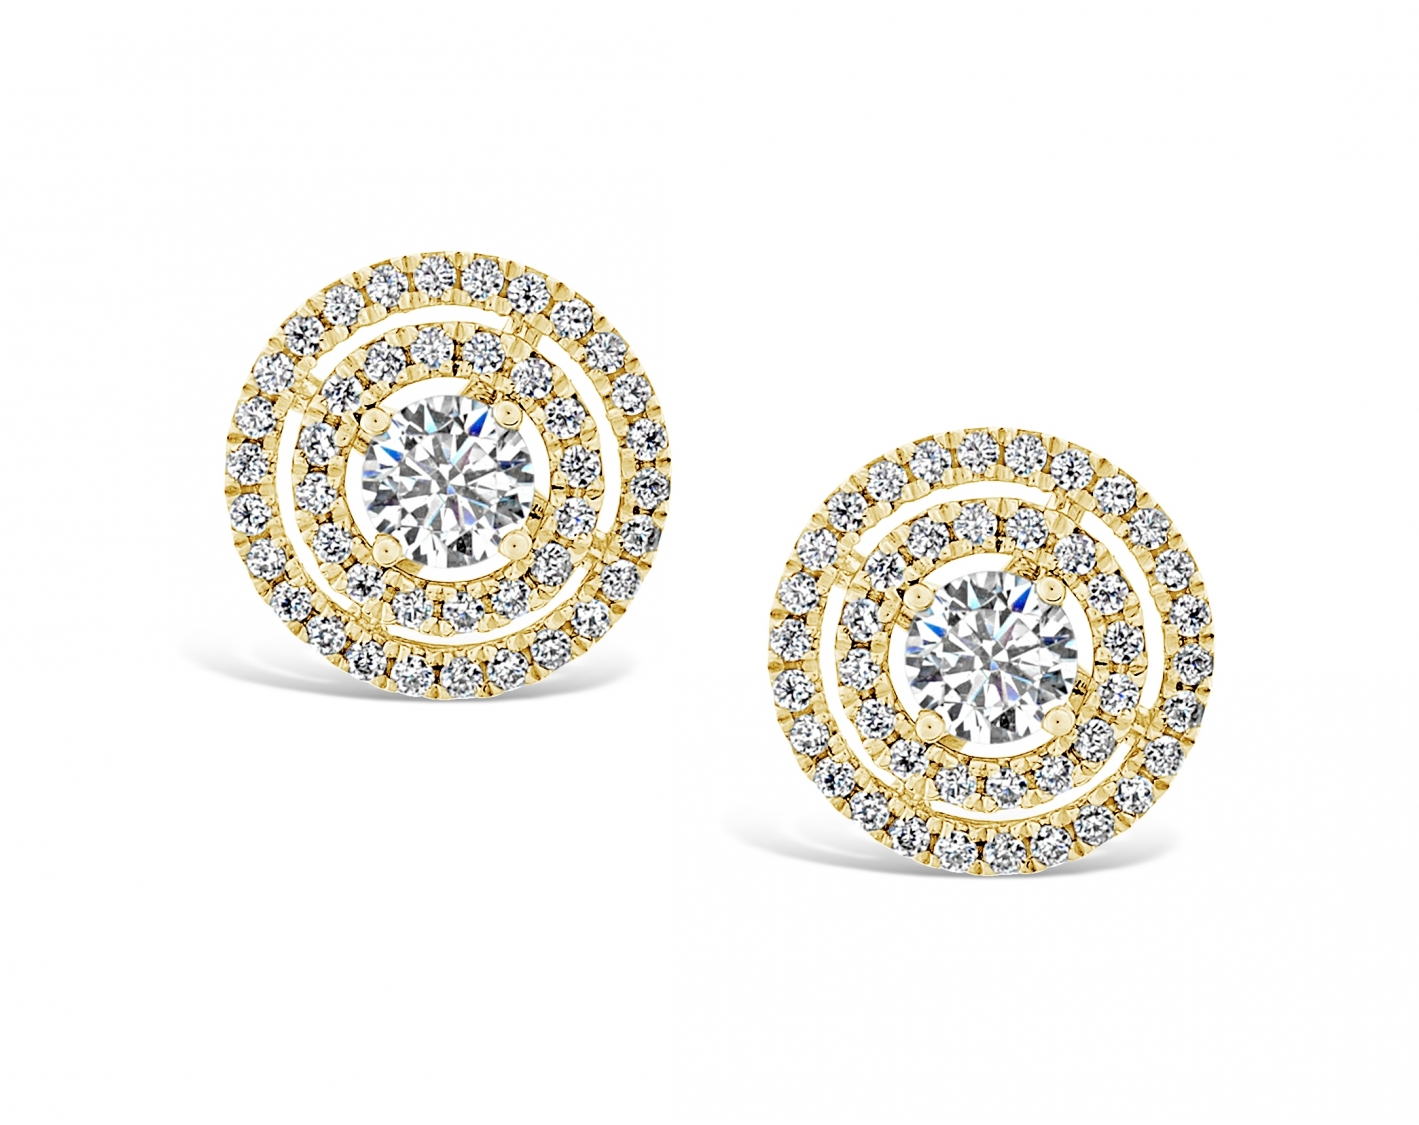 18k white gold double halo diamond earring studs Photos & images